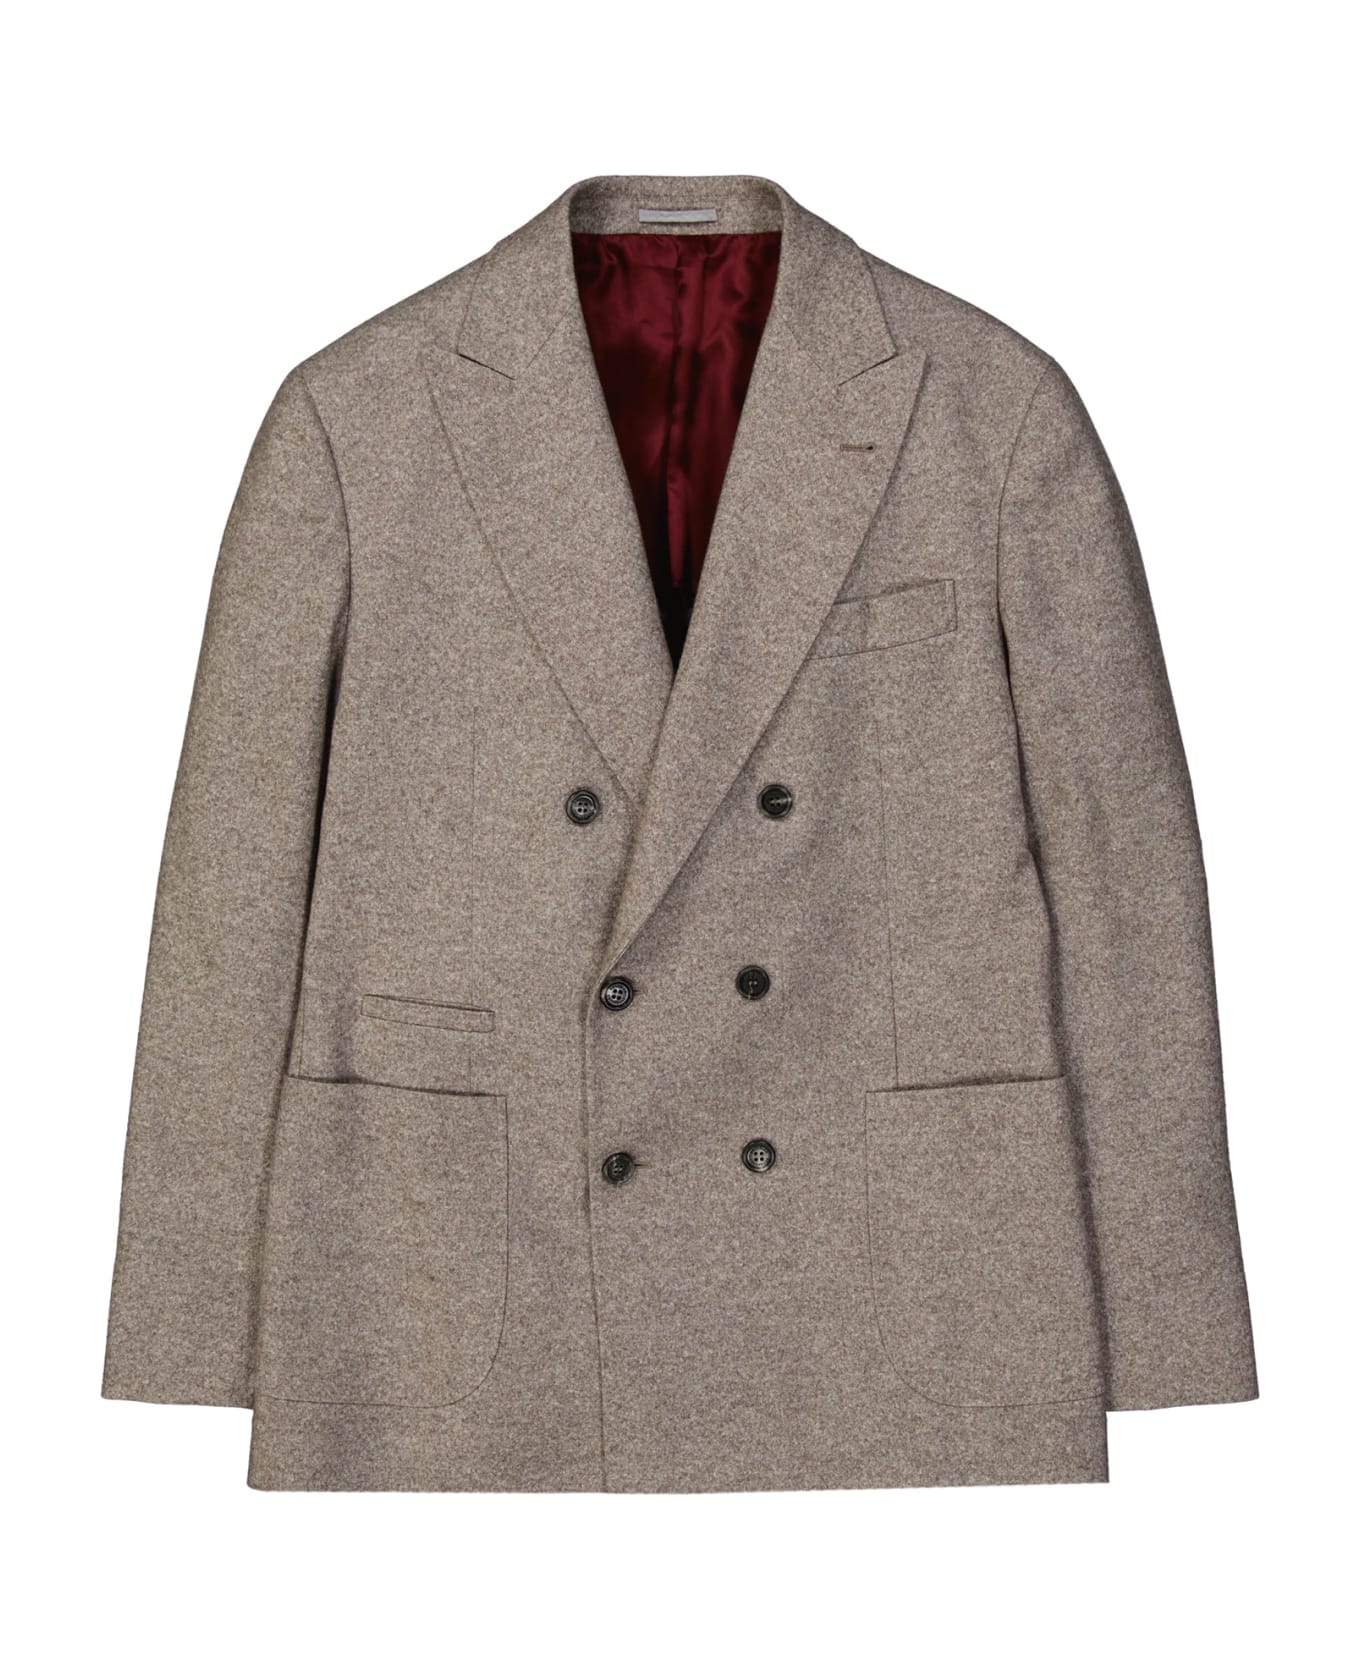 Brunello Cucinelli Double-breasted Wool Jacket - Beige